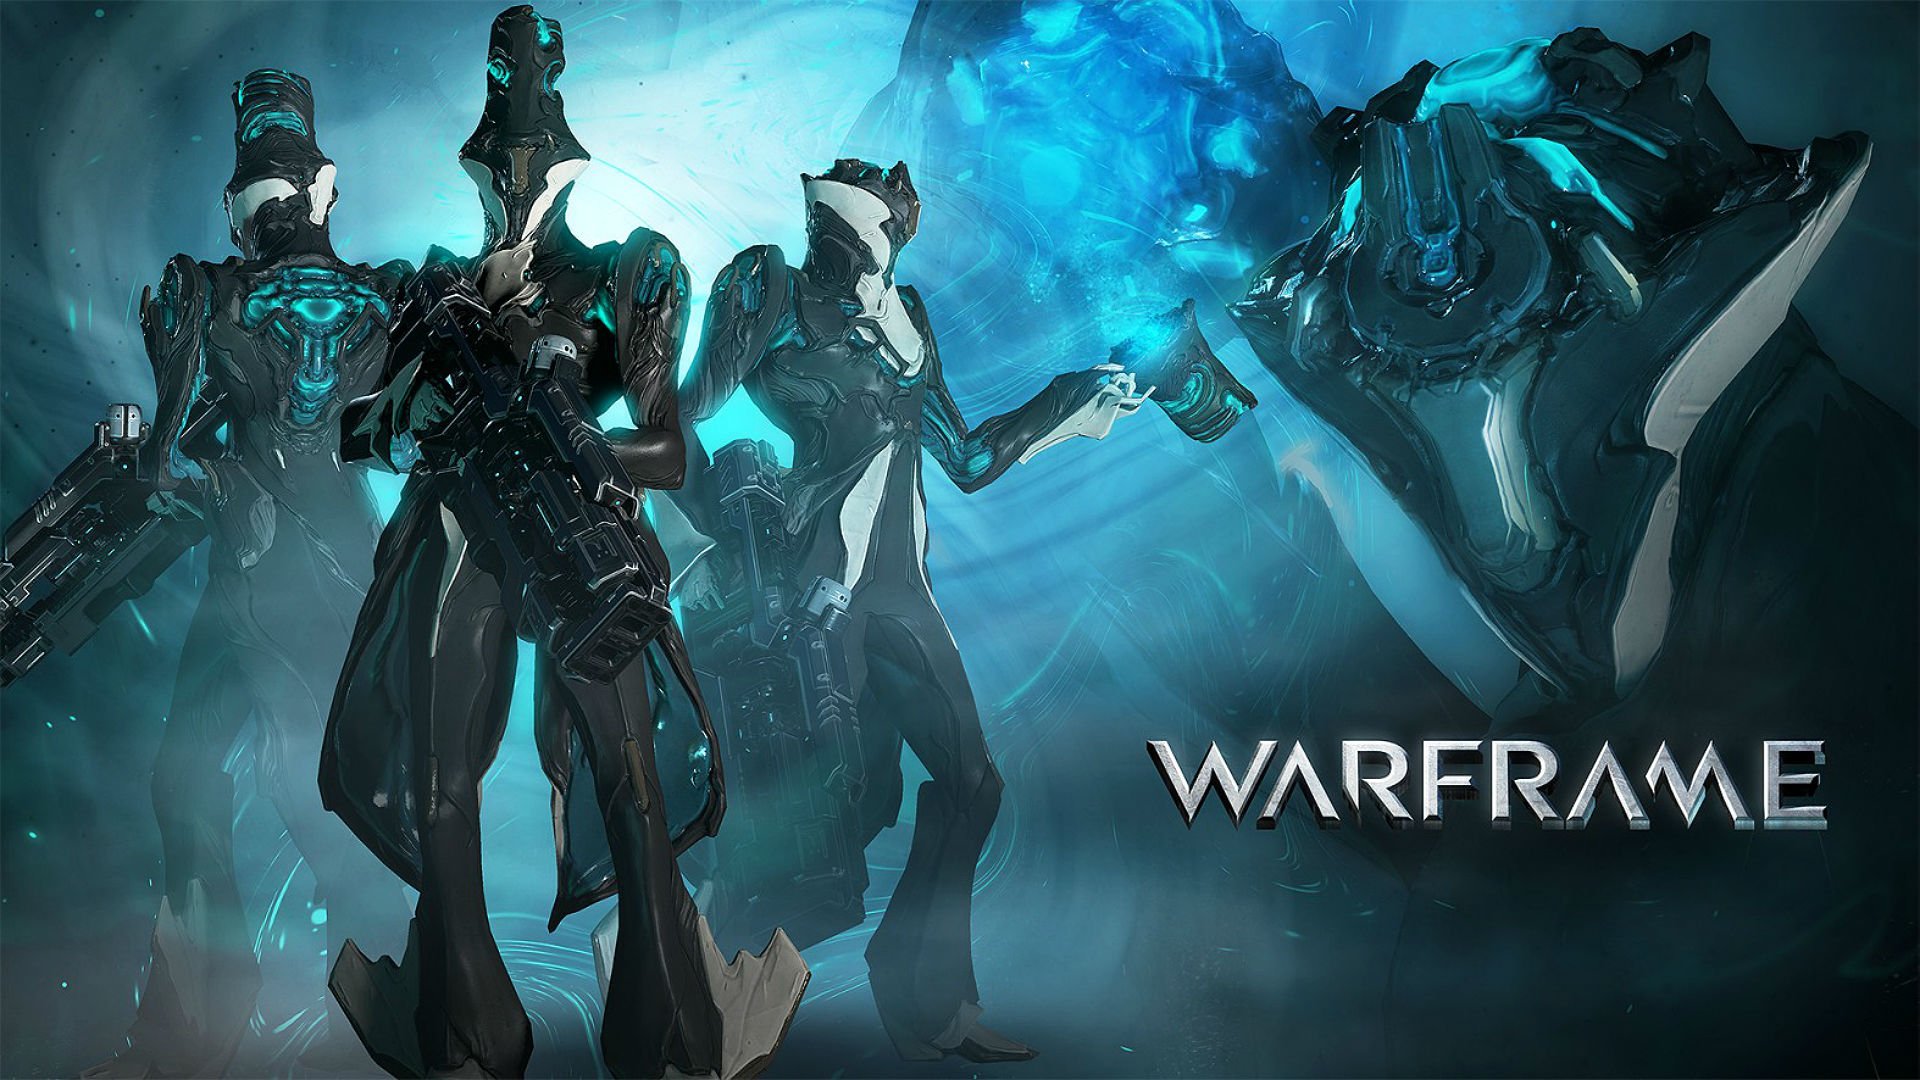 warframe, Warrior, Shooter, Robot, Cyborg, Online, Fighting, Sci fi, Poster Wallpaper